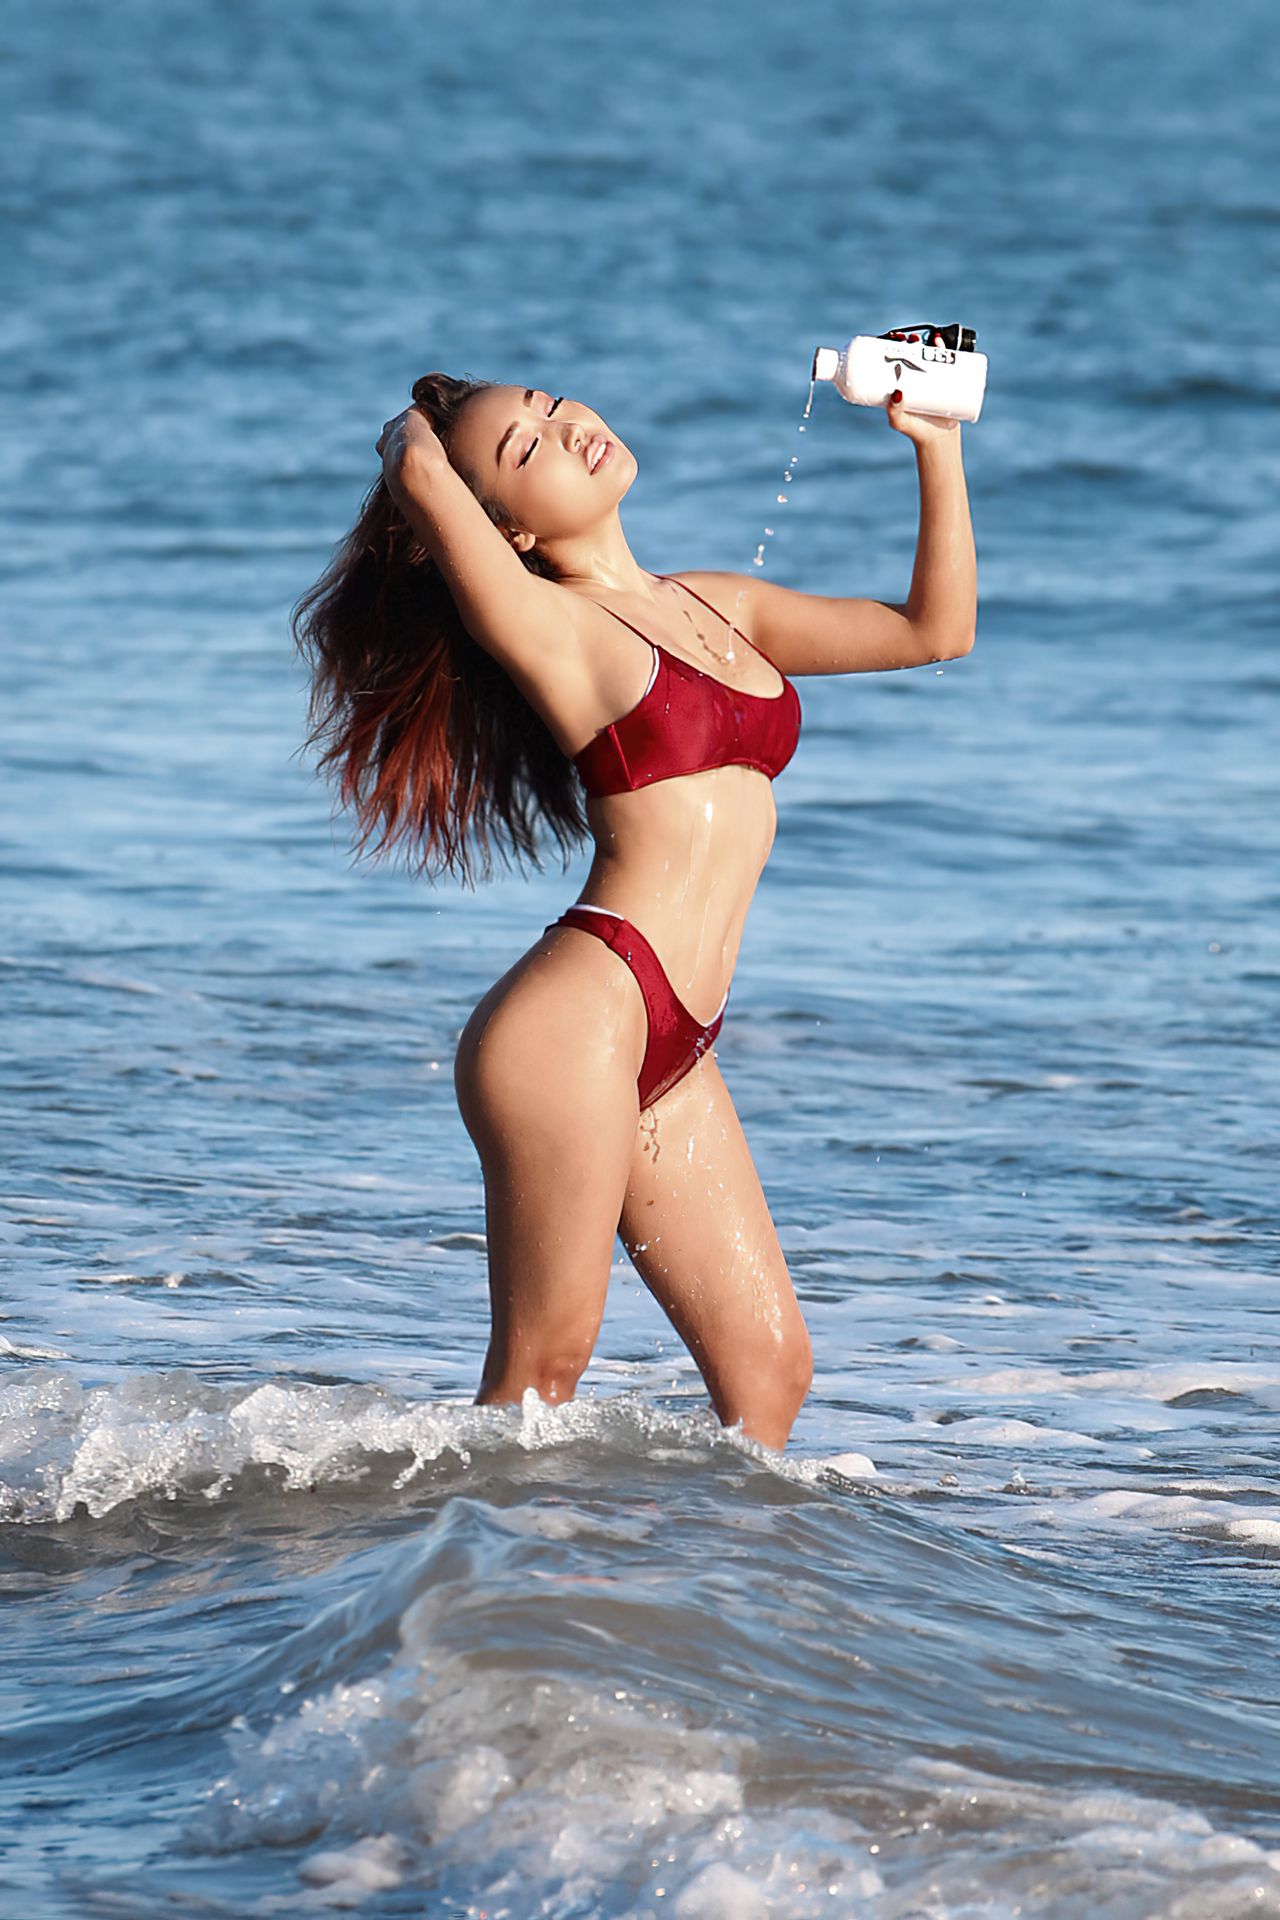 Asian hottie Nora Kyzy shows off her sexy bikini body at 138 Water photosho...